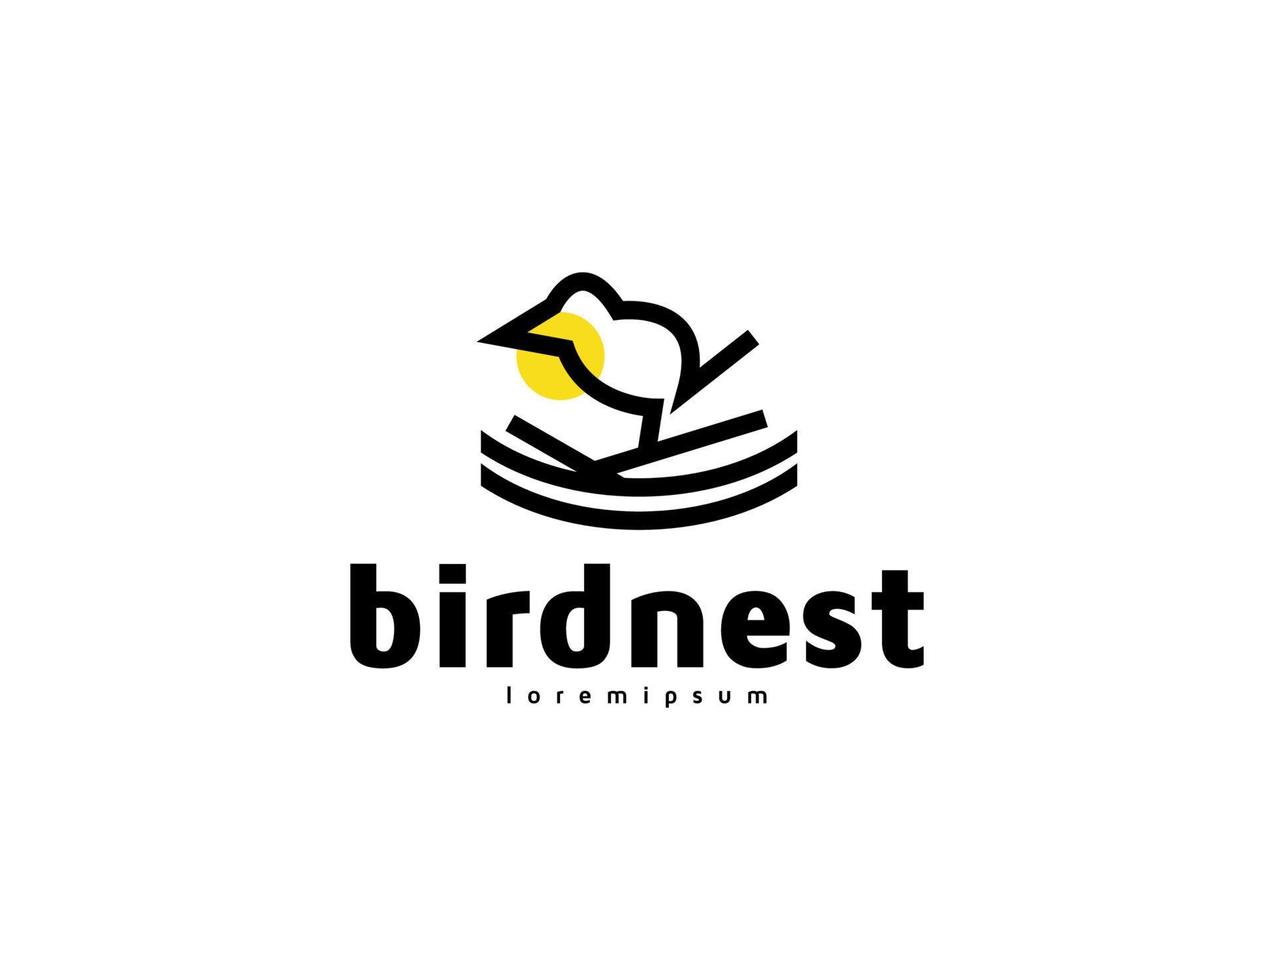 Abstract bird nest iconic logo design vector